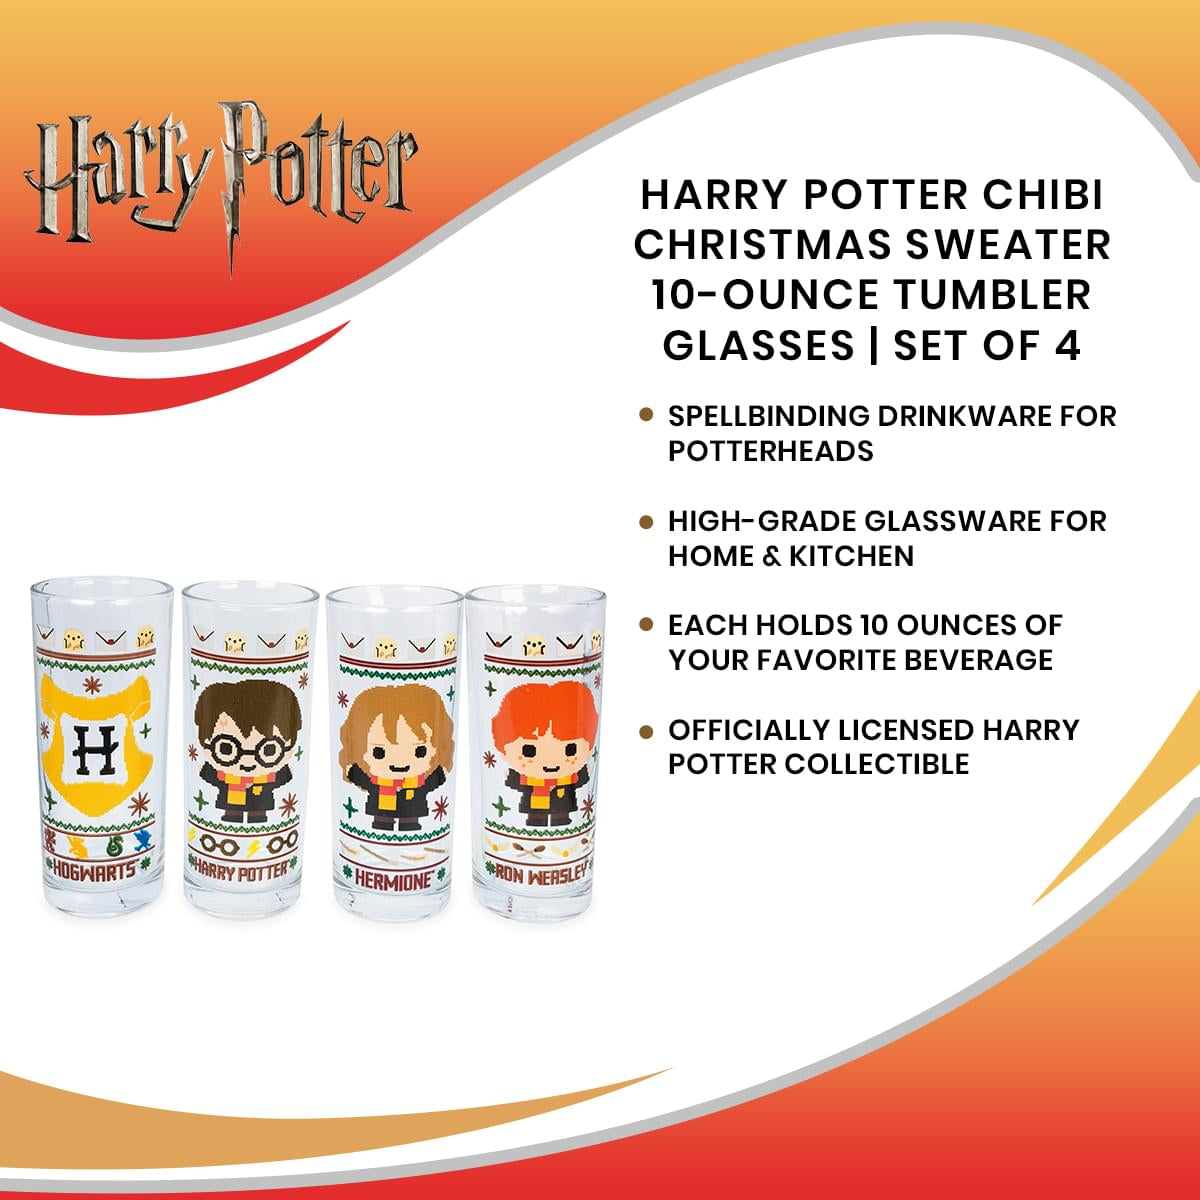 Harry Potter Chibi Christmas Sweater 10-Ounce Tumbler Glasses | Set of 4